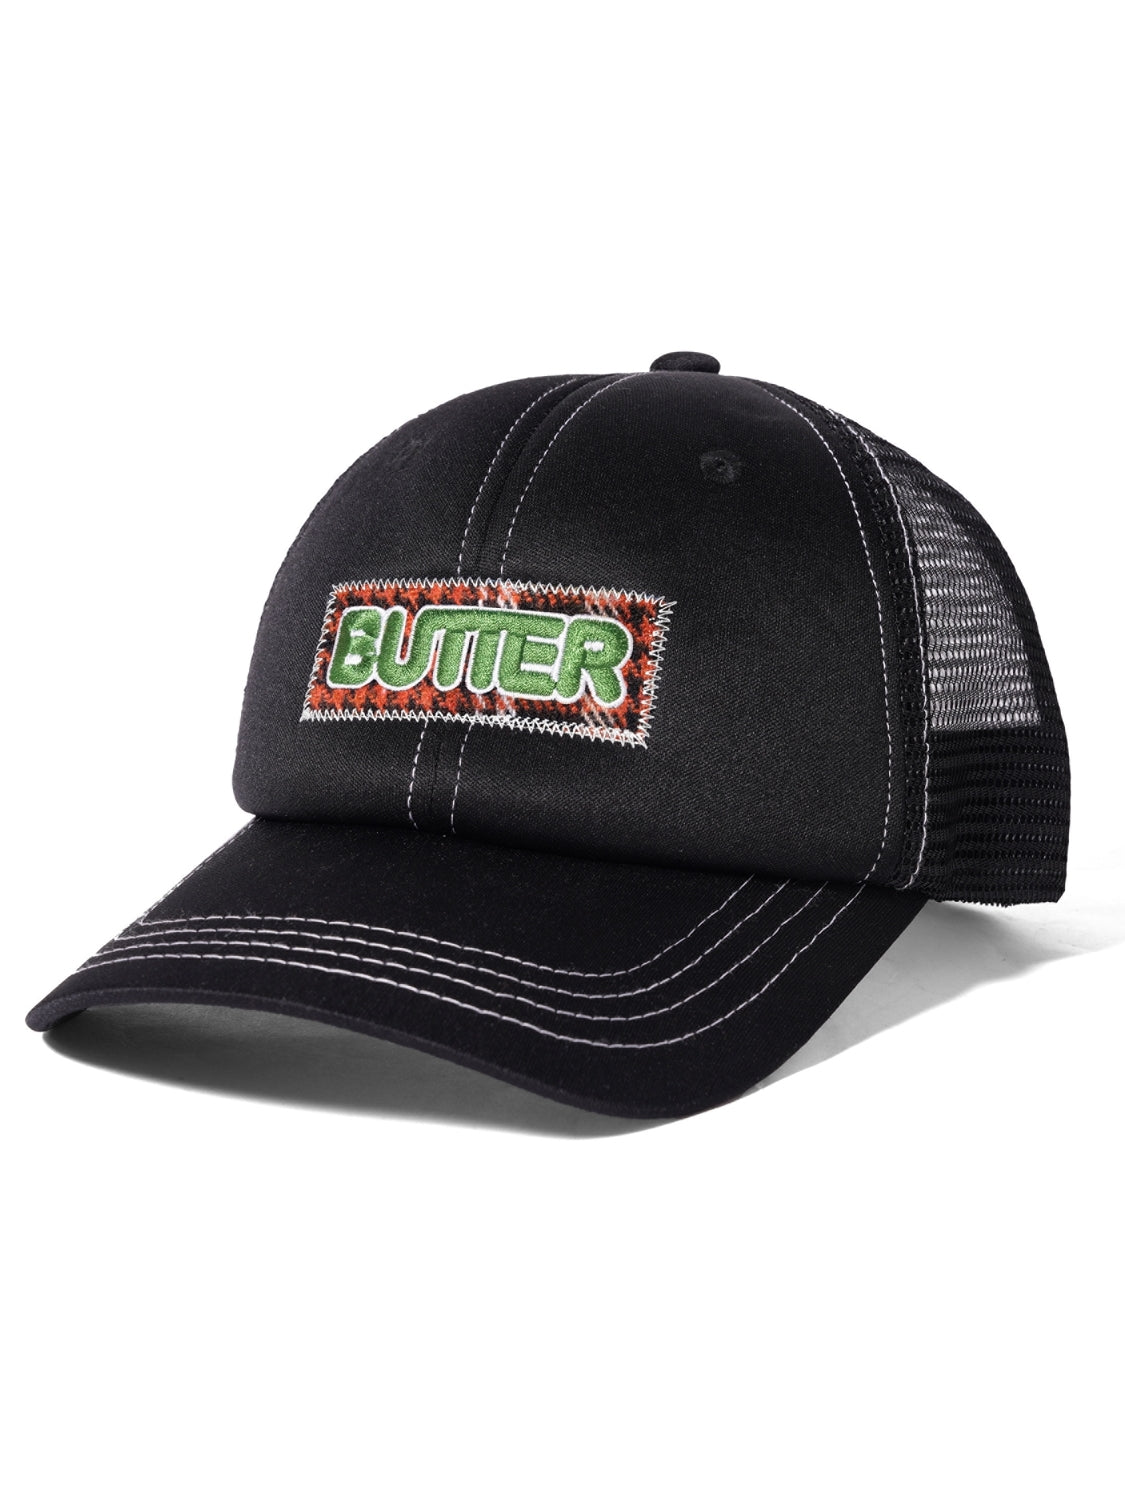 BUTTER GOODS Dougie Trucker Hat - Black